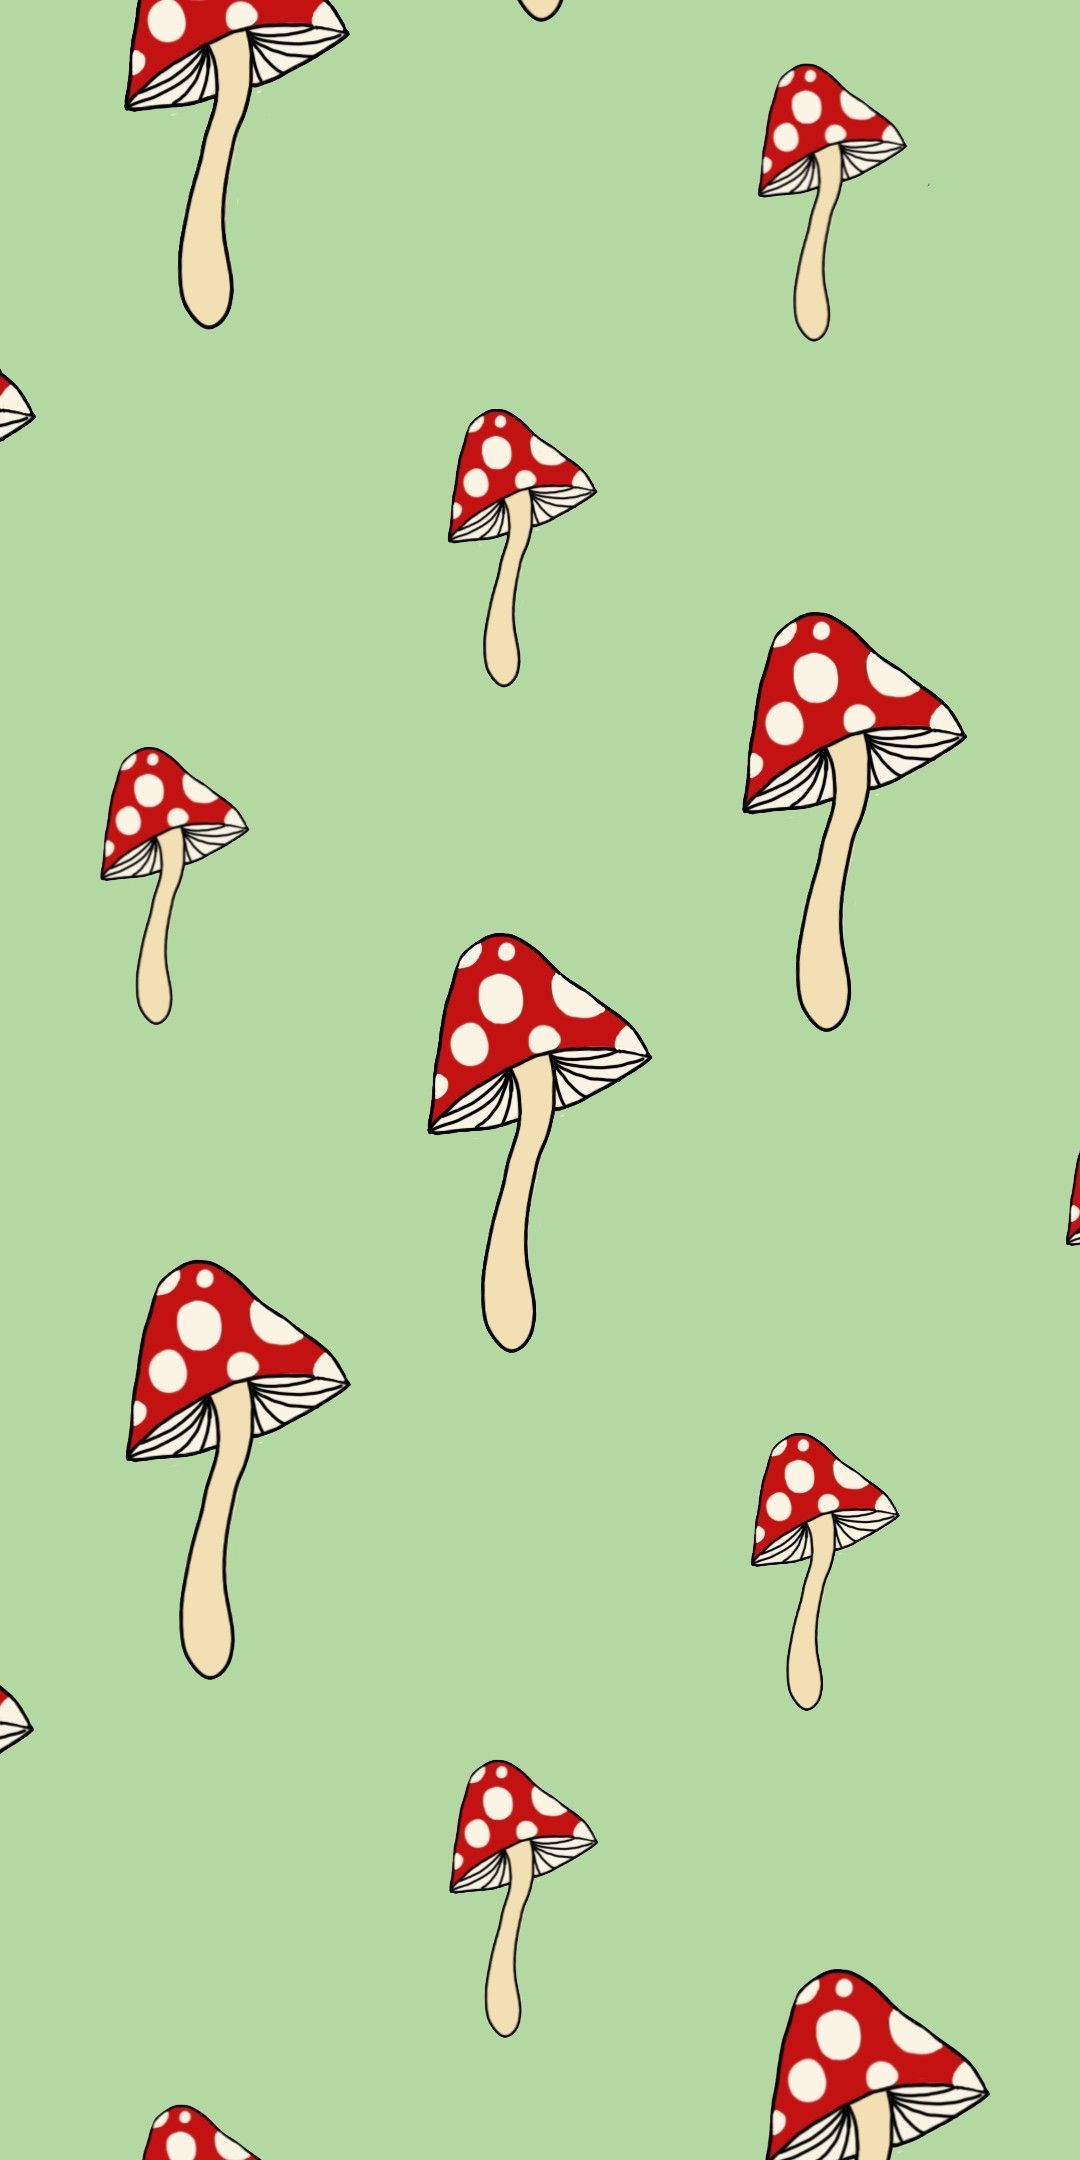 A pattern of mushrooms on green background - Mushroom